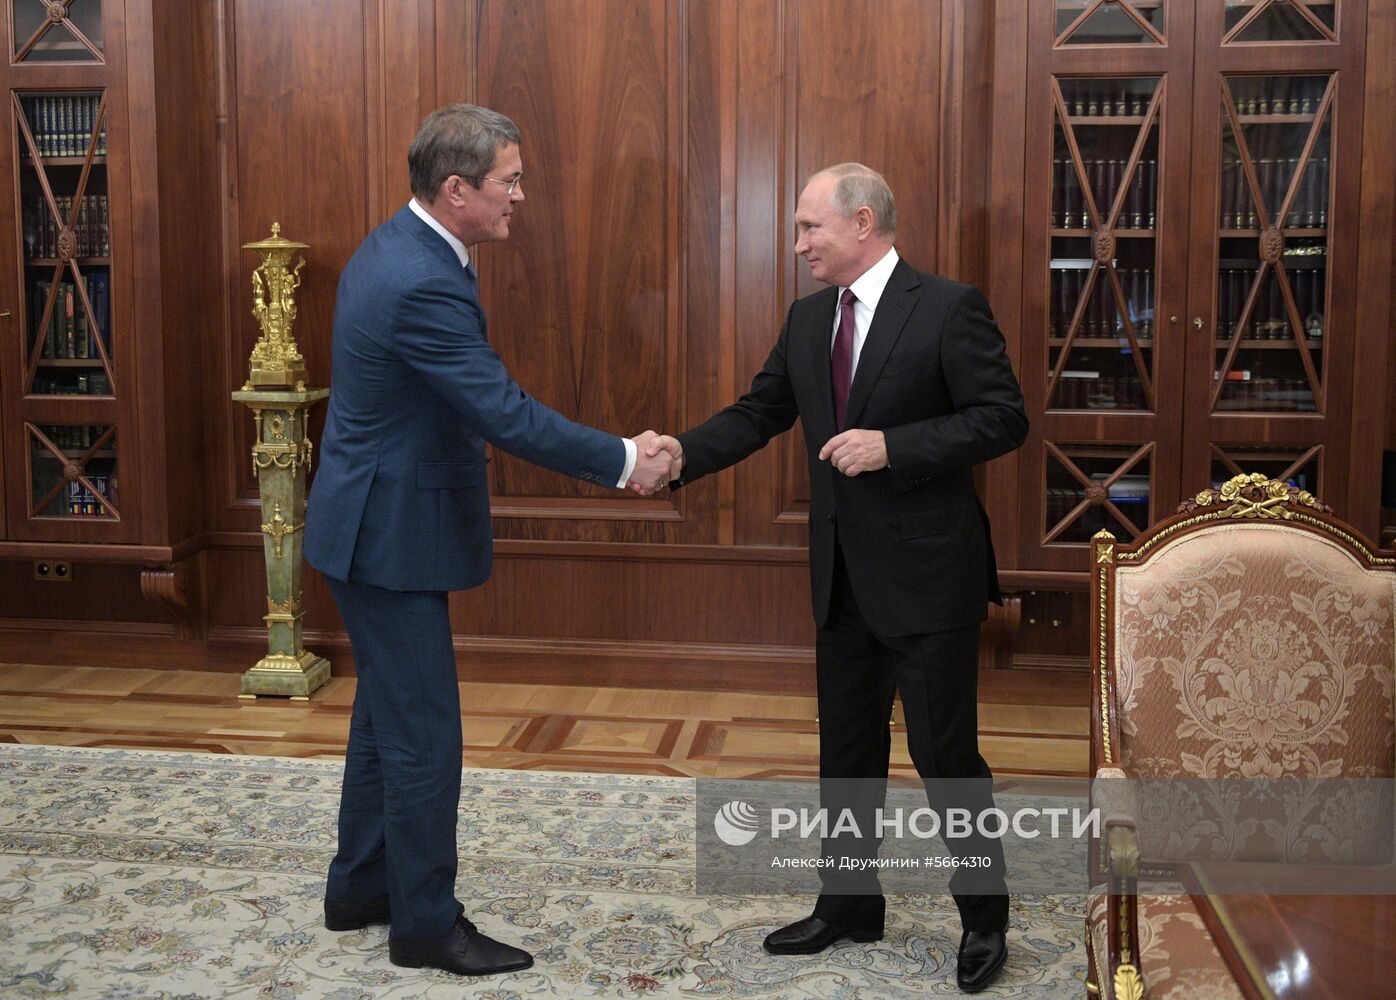 Президент РФ В. Путин назначил врио главы Башкирии Р. Хабирова